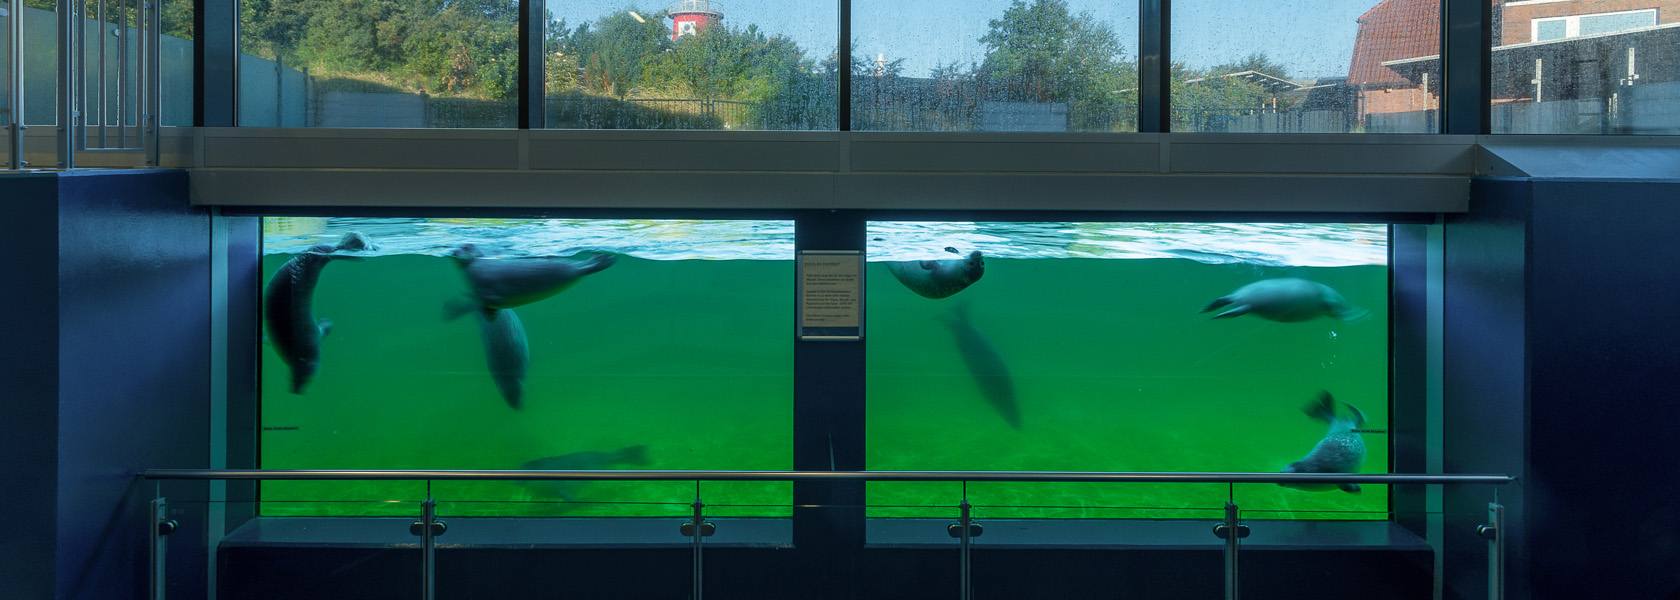 Unterwasserfenster der Seehundstation Nationalpark-Haus Norden-Norddeich, © Seehundstation Norddeich, Christian Ballé